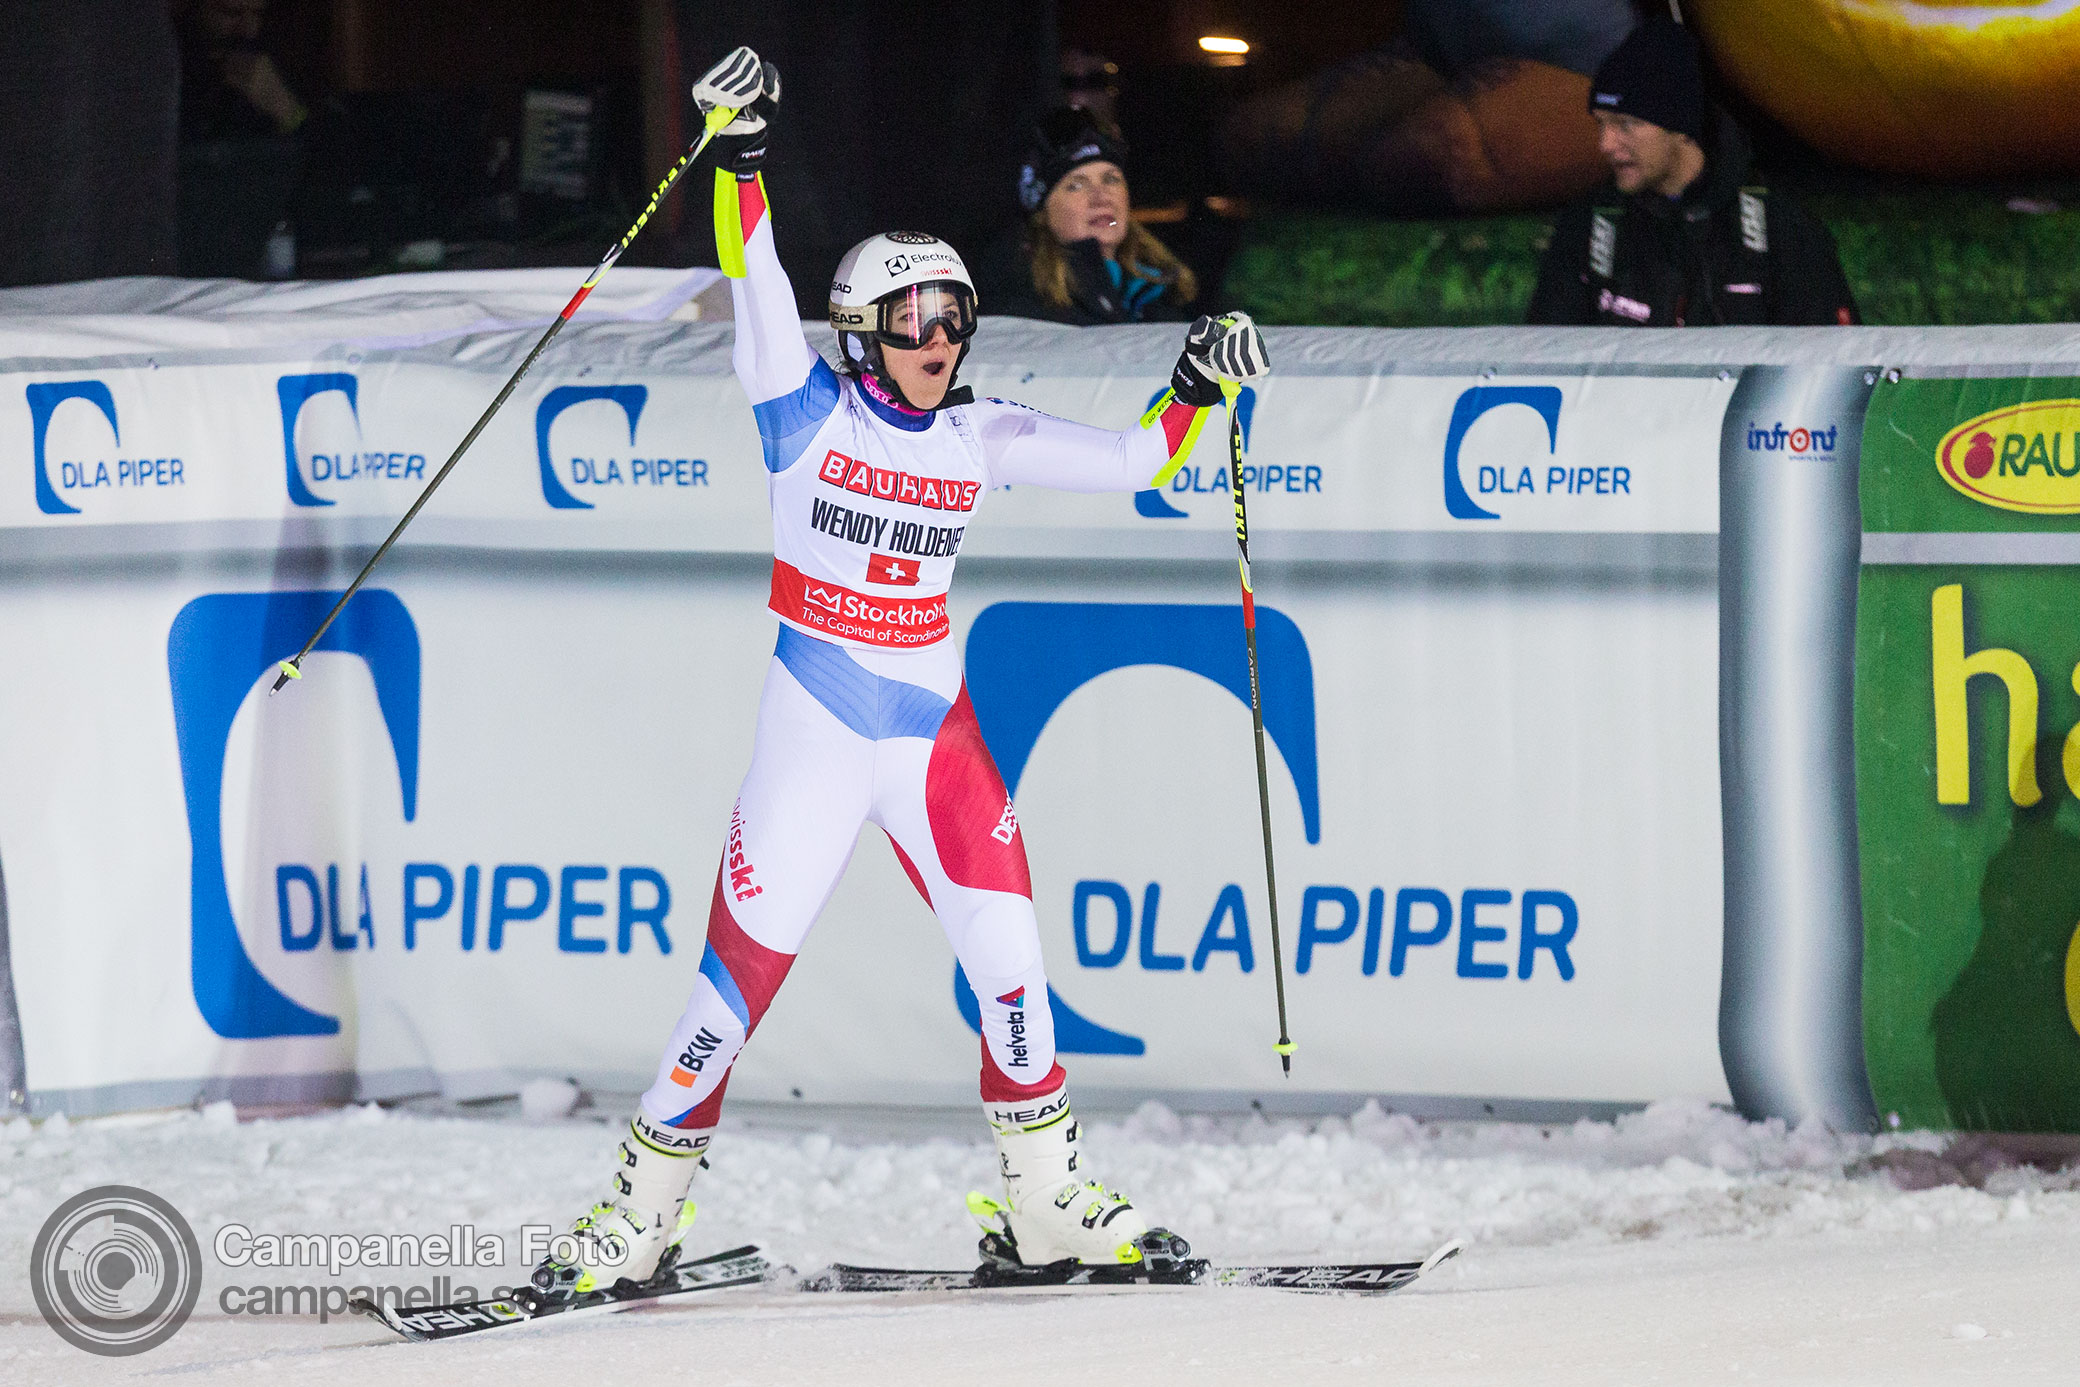 Ski World Cup comes to Stockholm - Michael Campanella Photography